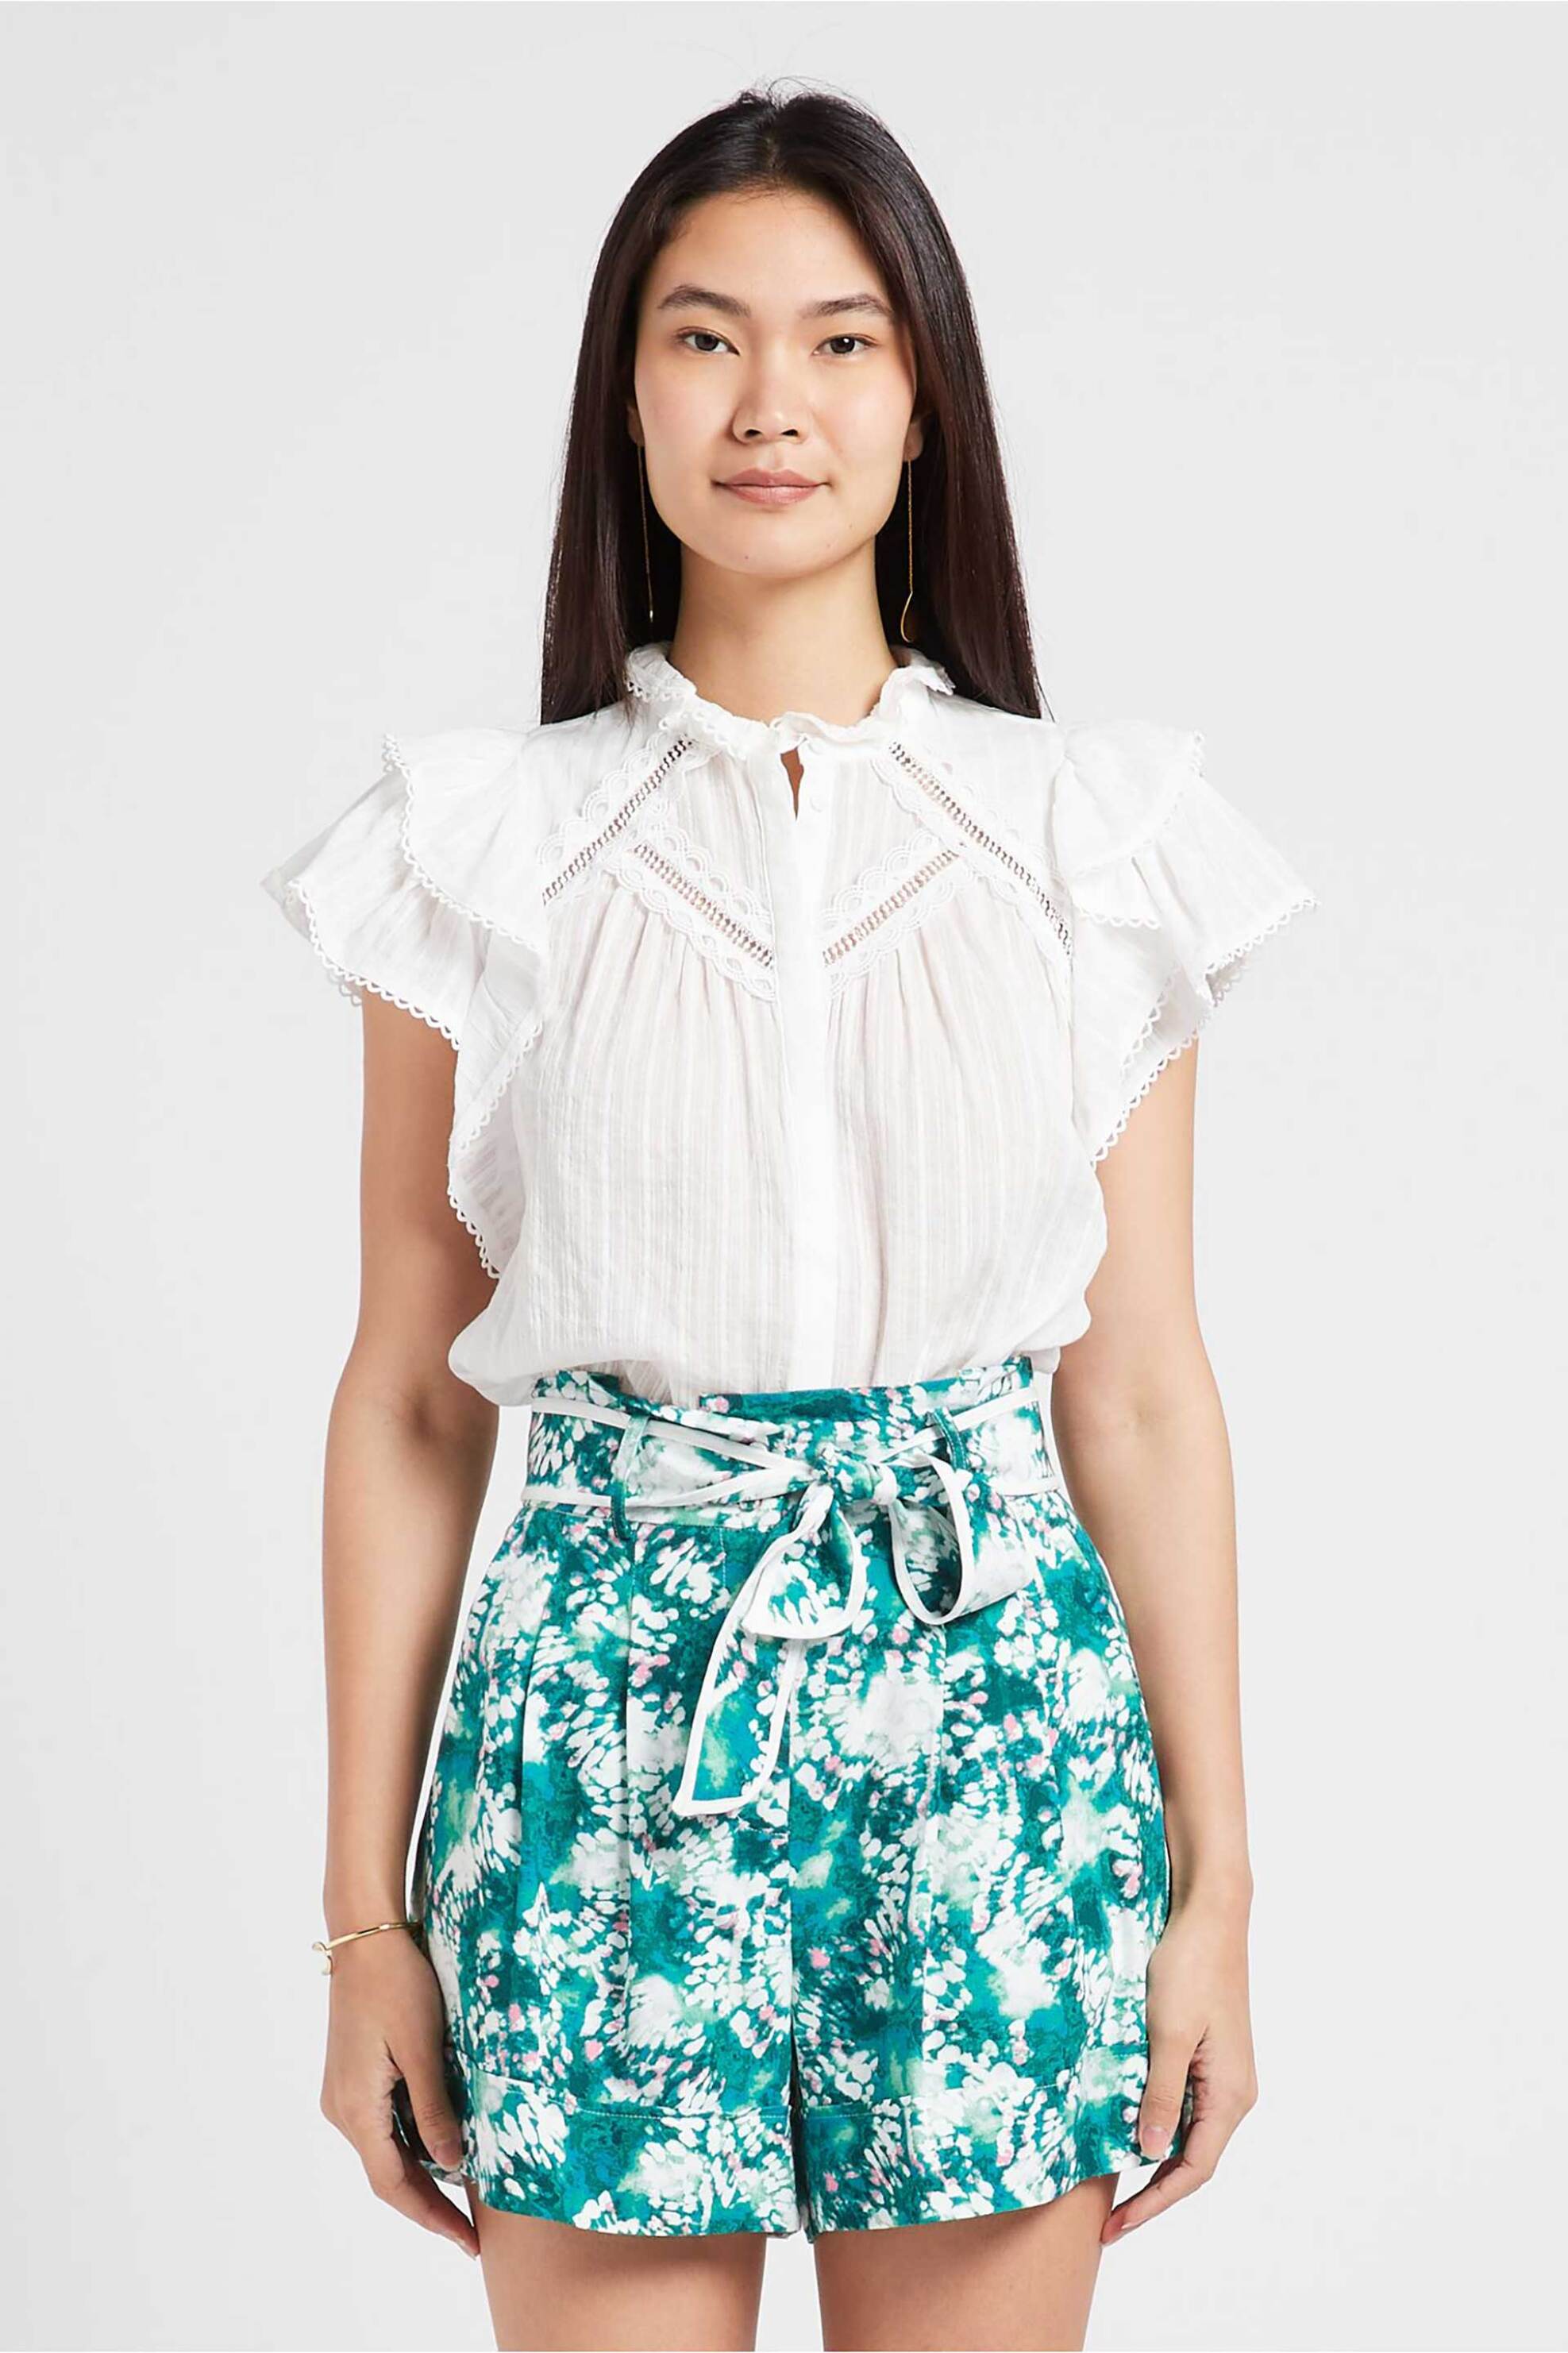 Suncoo γυναικεία μπλούζα μονόχρωμη με βολάν "Lady" - C07062E24 Λευκό 9-4973000107|EC3527|T1